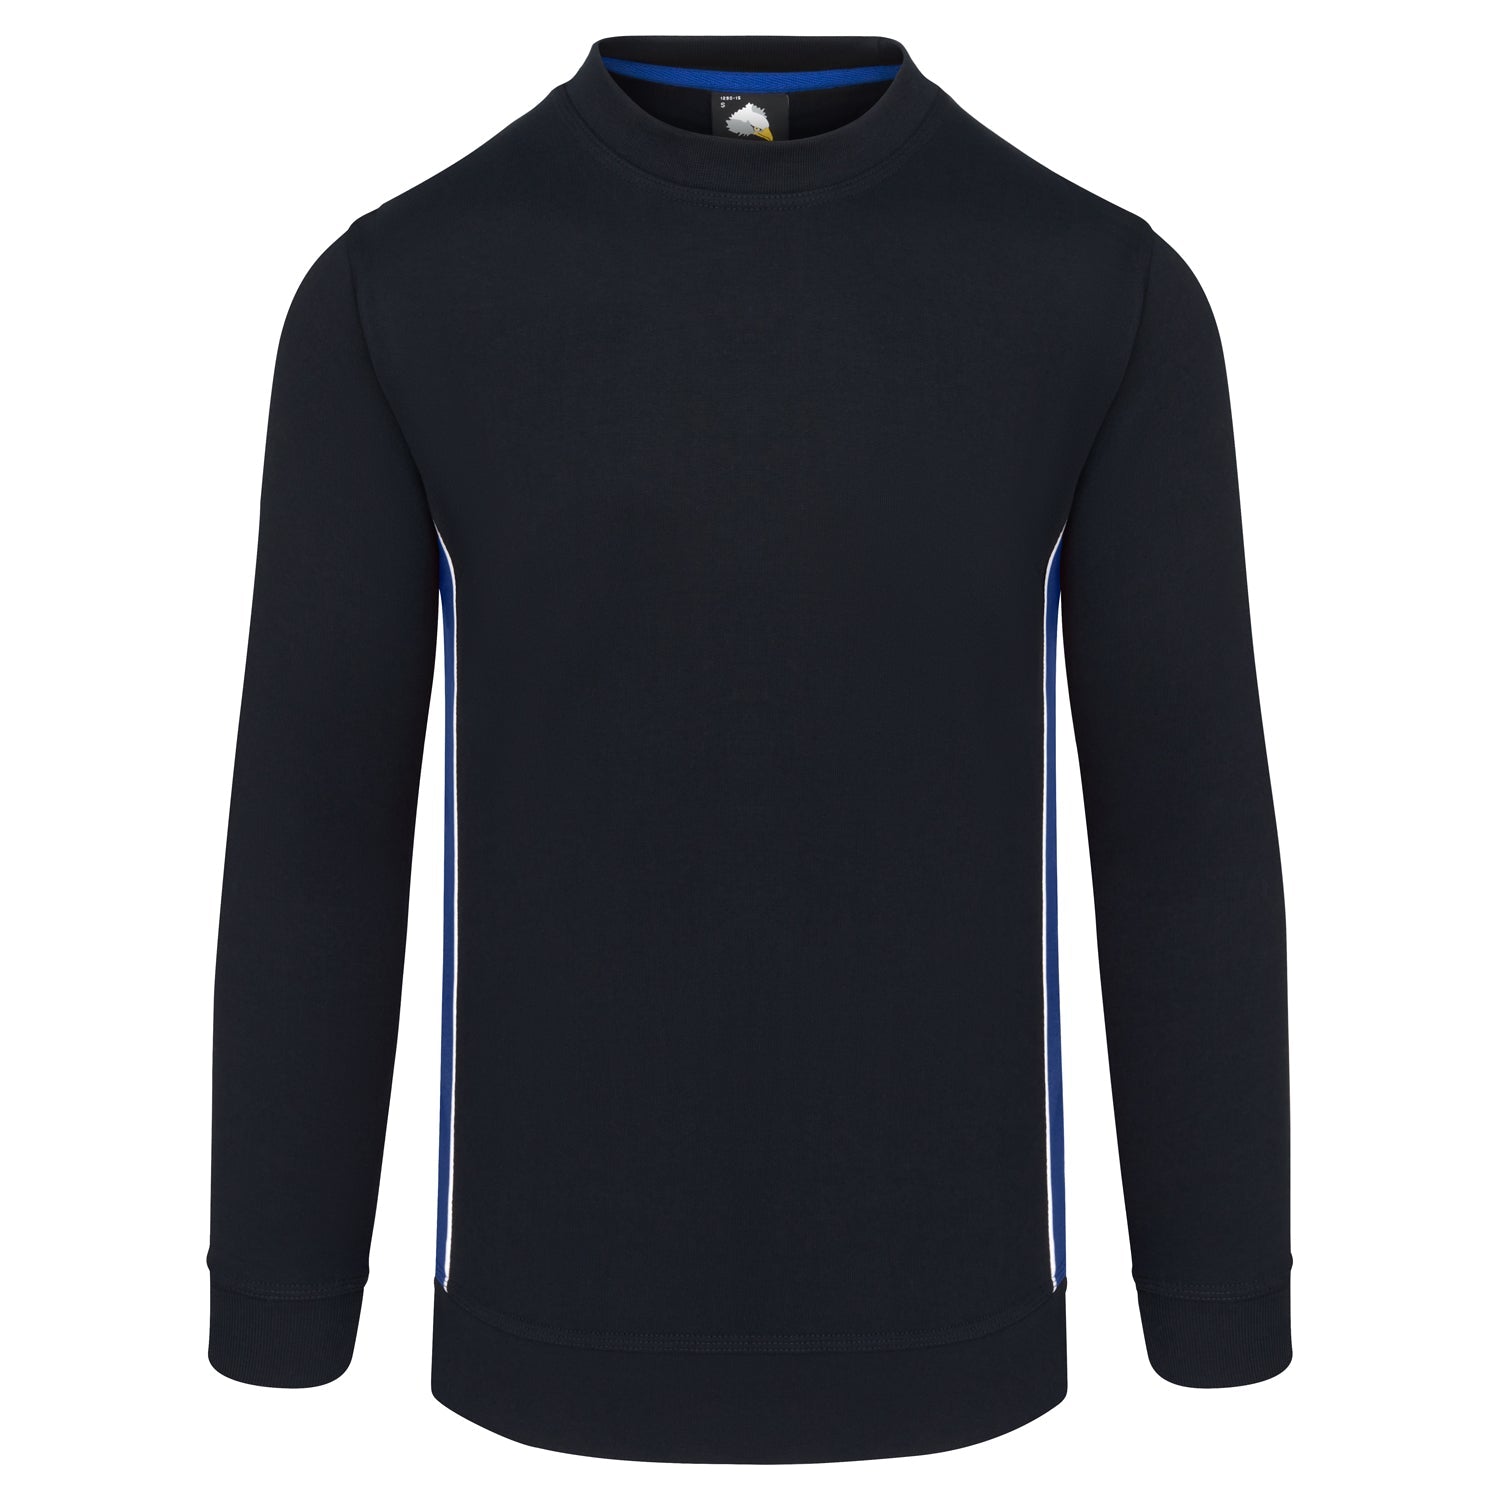 ORN Silverswift Two Tone Workwear Sweatshirt - Navy/Royal Blue